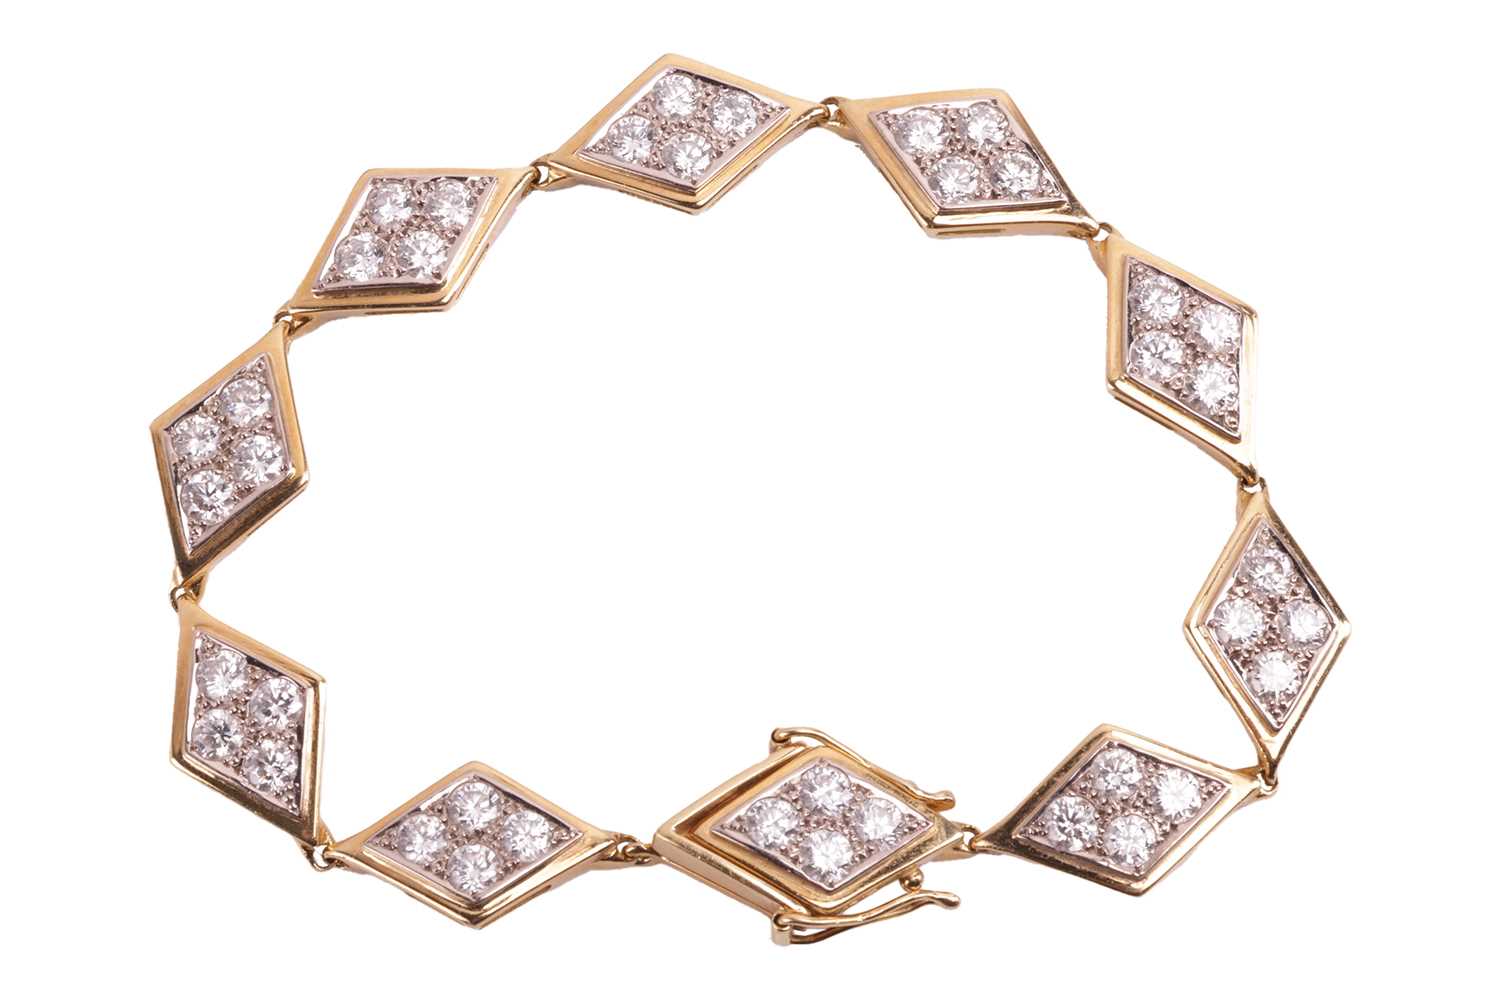 A diamond-set link bracelet in 18ct gold, comprising a series of lozenge-shaped panel links, each se - Image 2 of 5